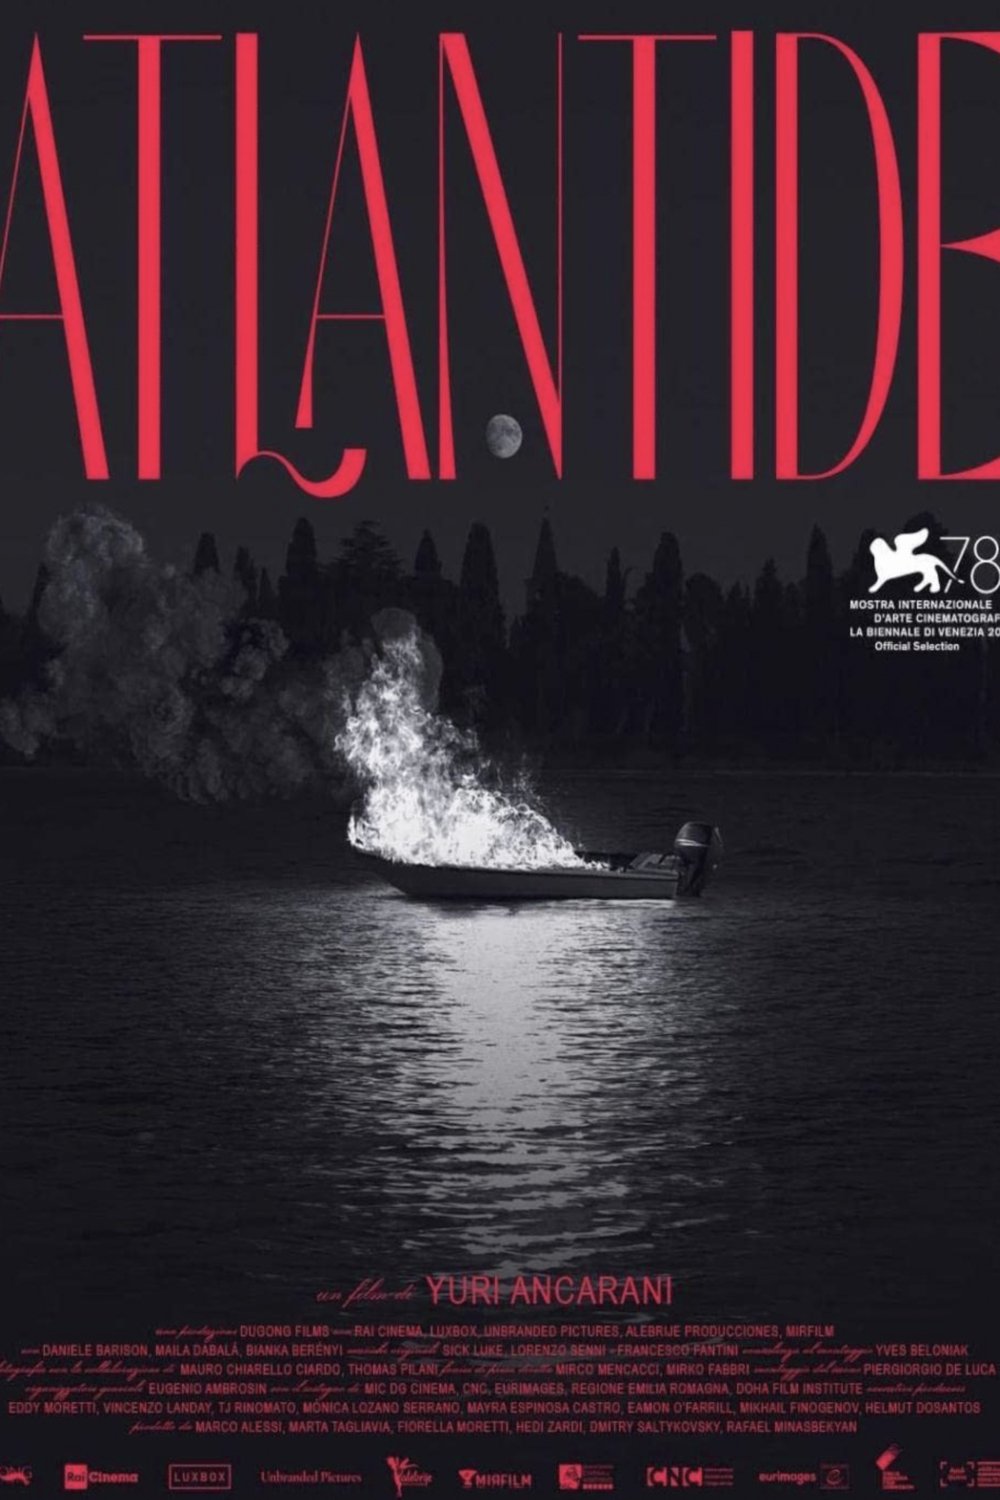 Italian poster of the movie Atlantide